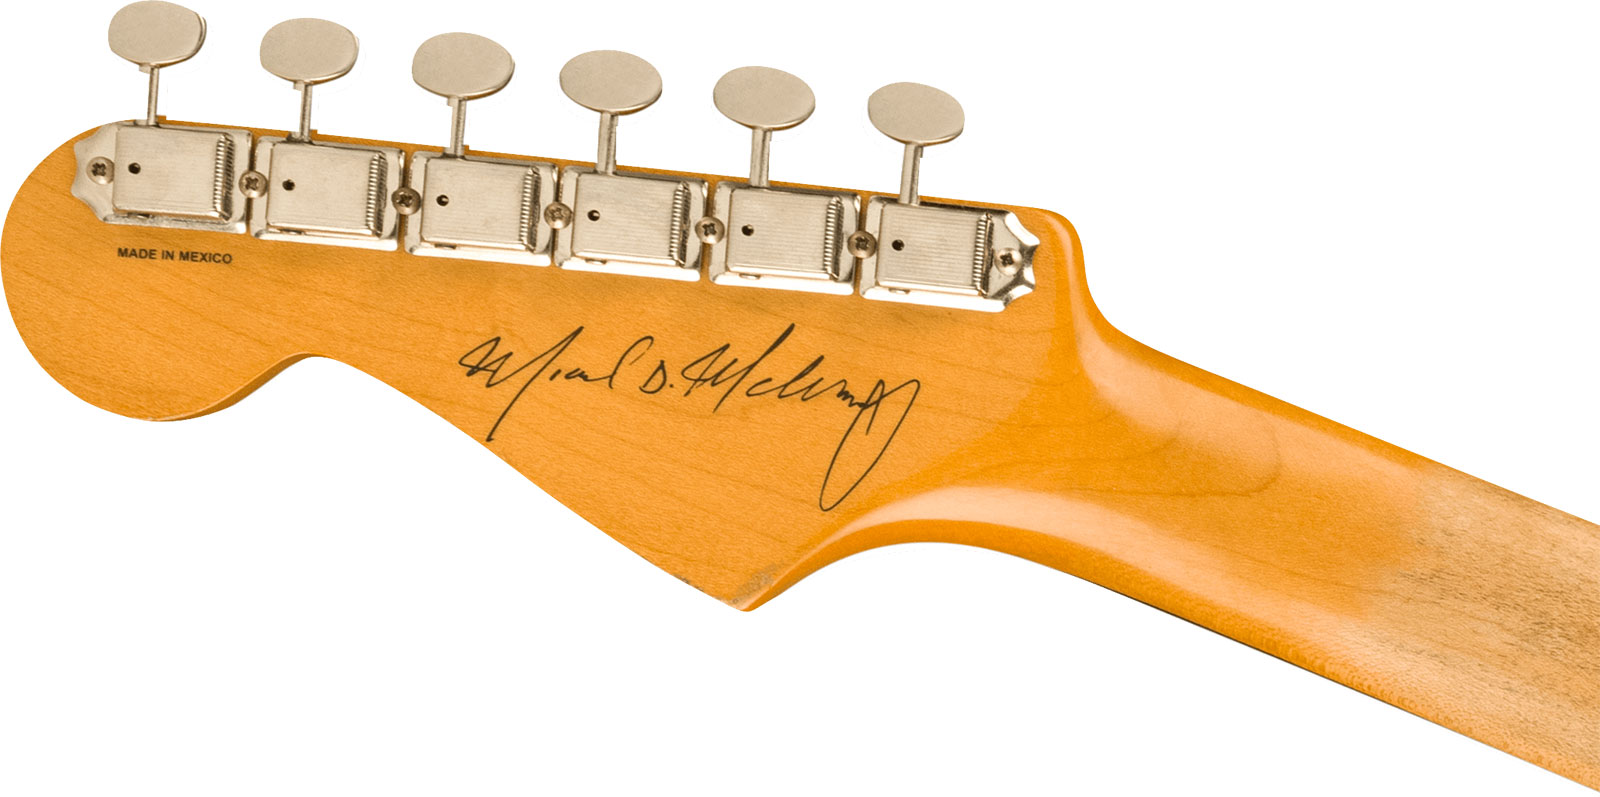 Fender Mike Mccready Strat Mex Signature 3s Trem Rw - Road Worn 3-color Sunburst - Signature-E-Gitarre - Variation 3